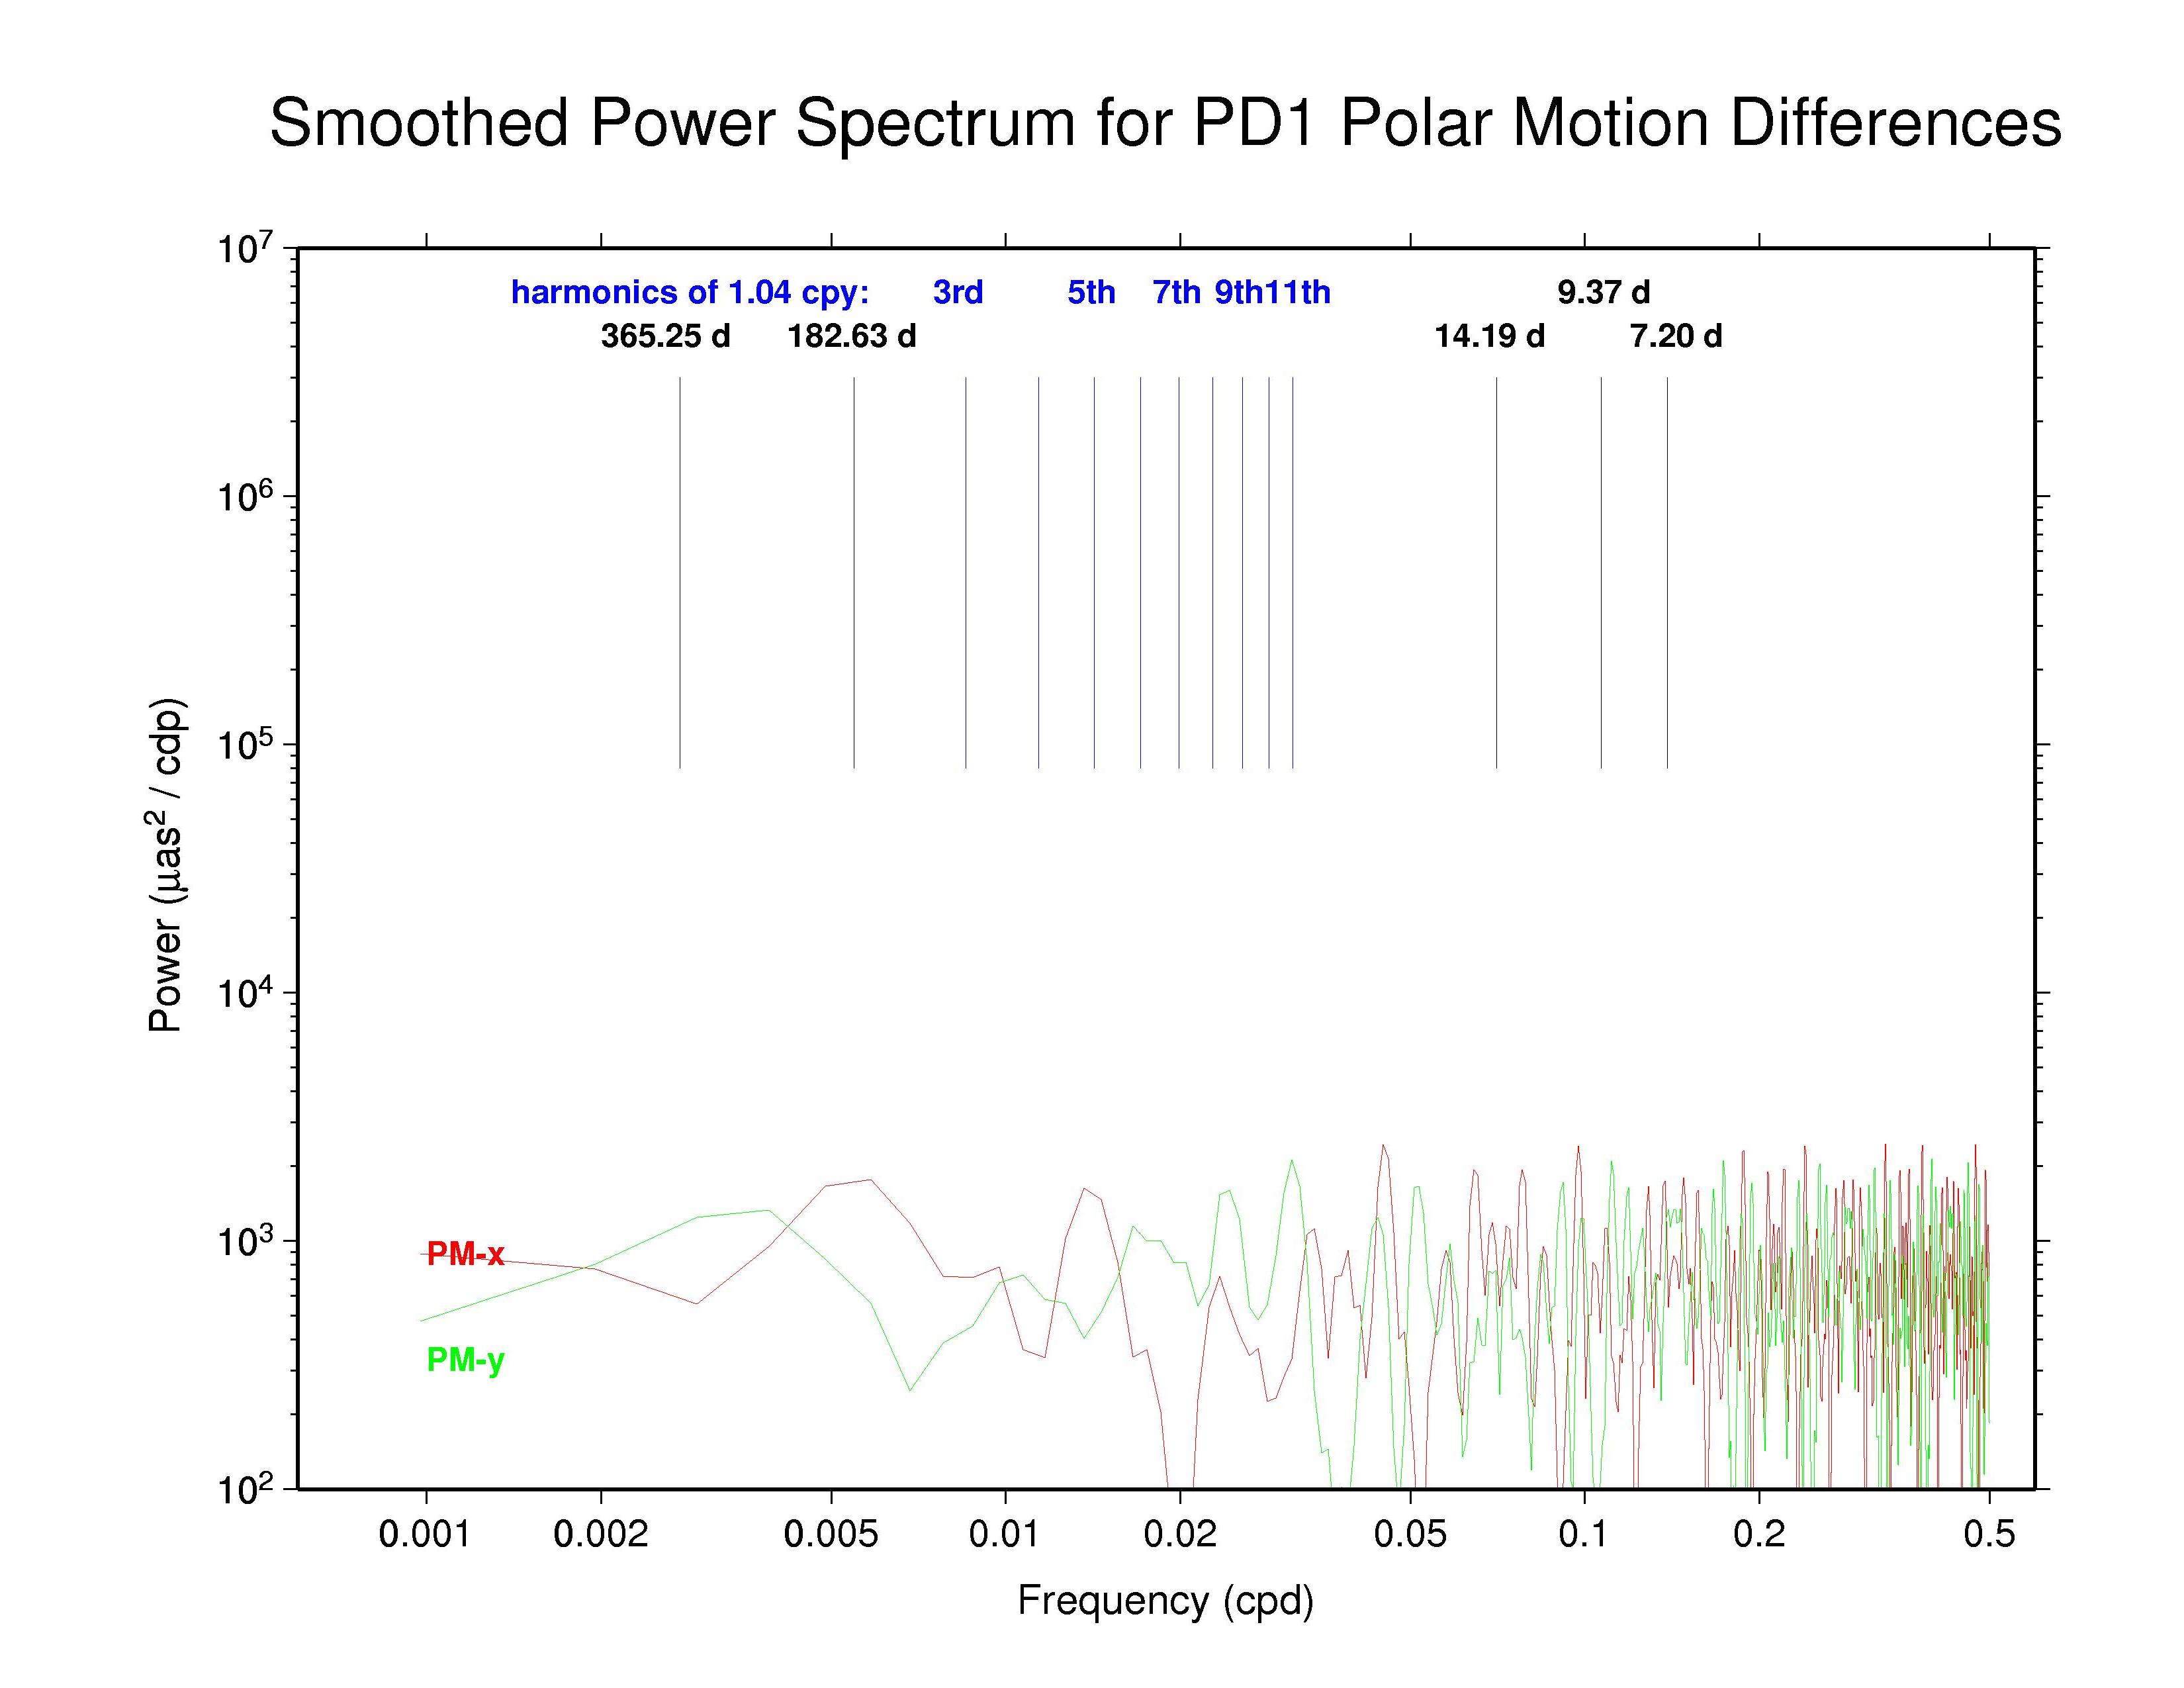 PDR polar motion discontinuities